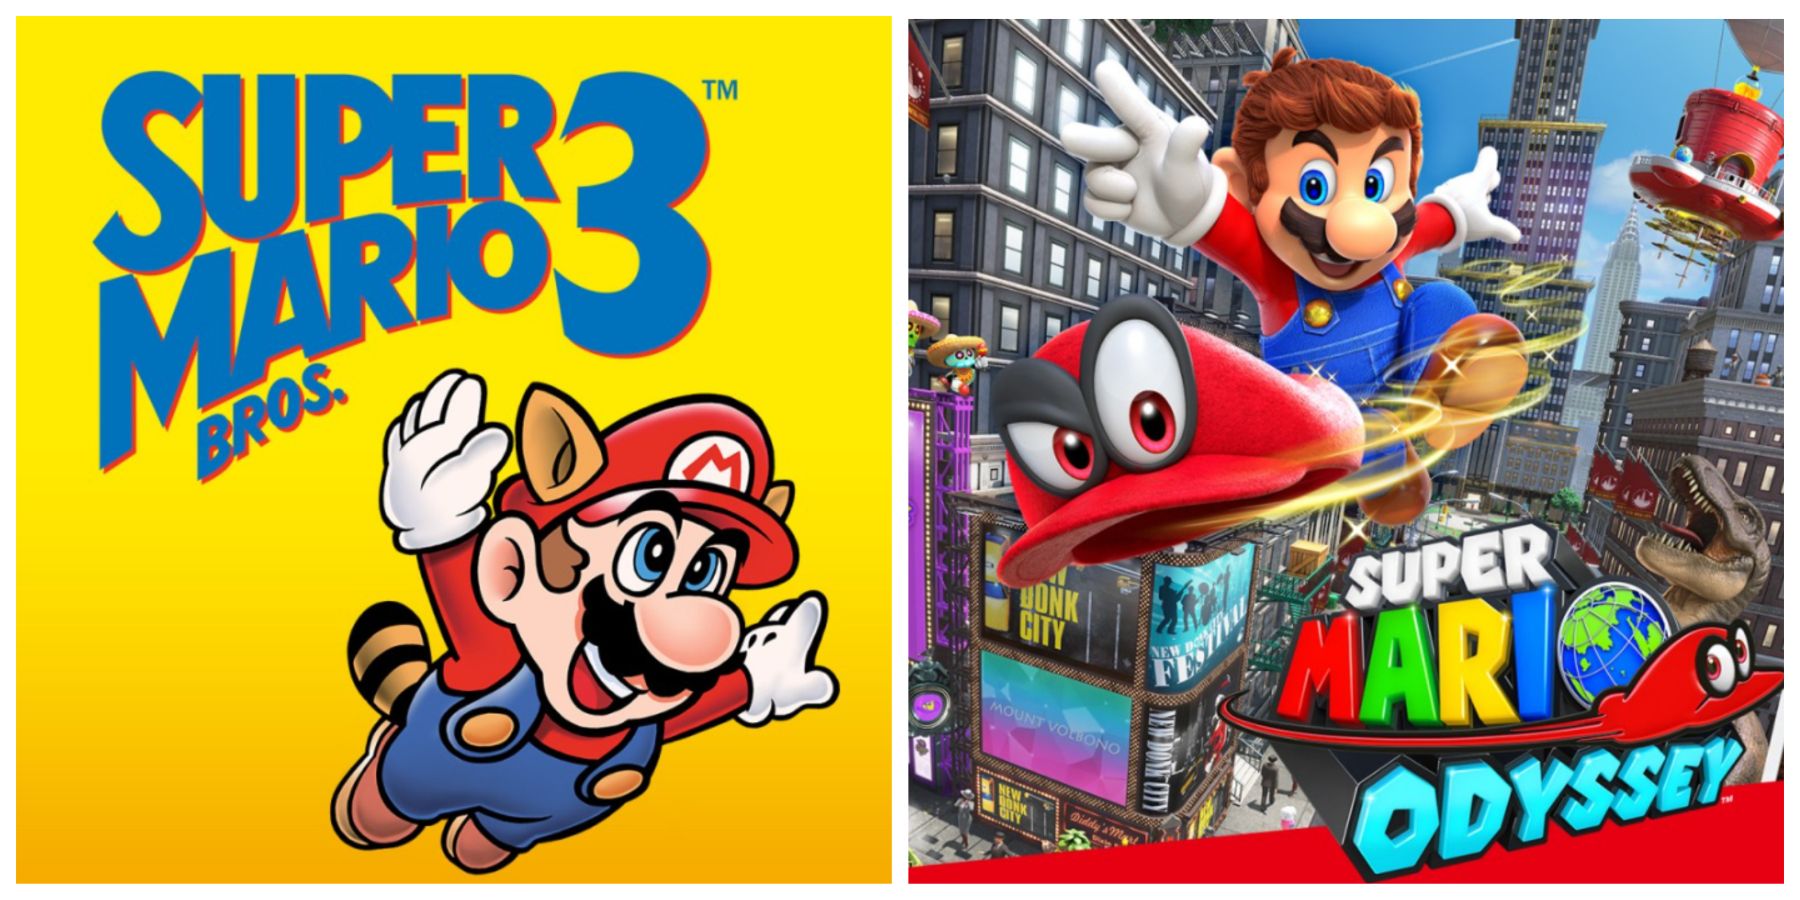 (Left) Super Mario Bros. 3 cover art (Right) Super Mario Odyssey cover art